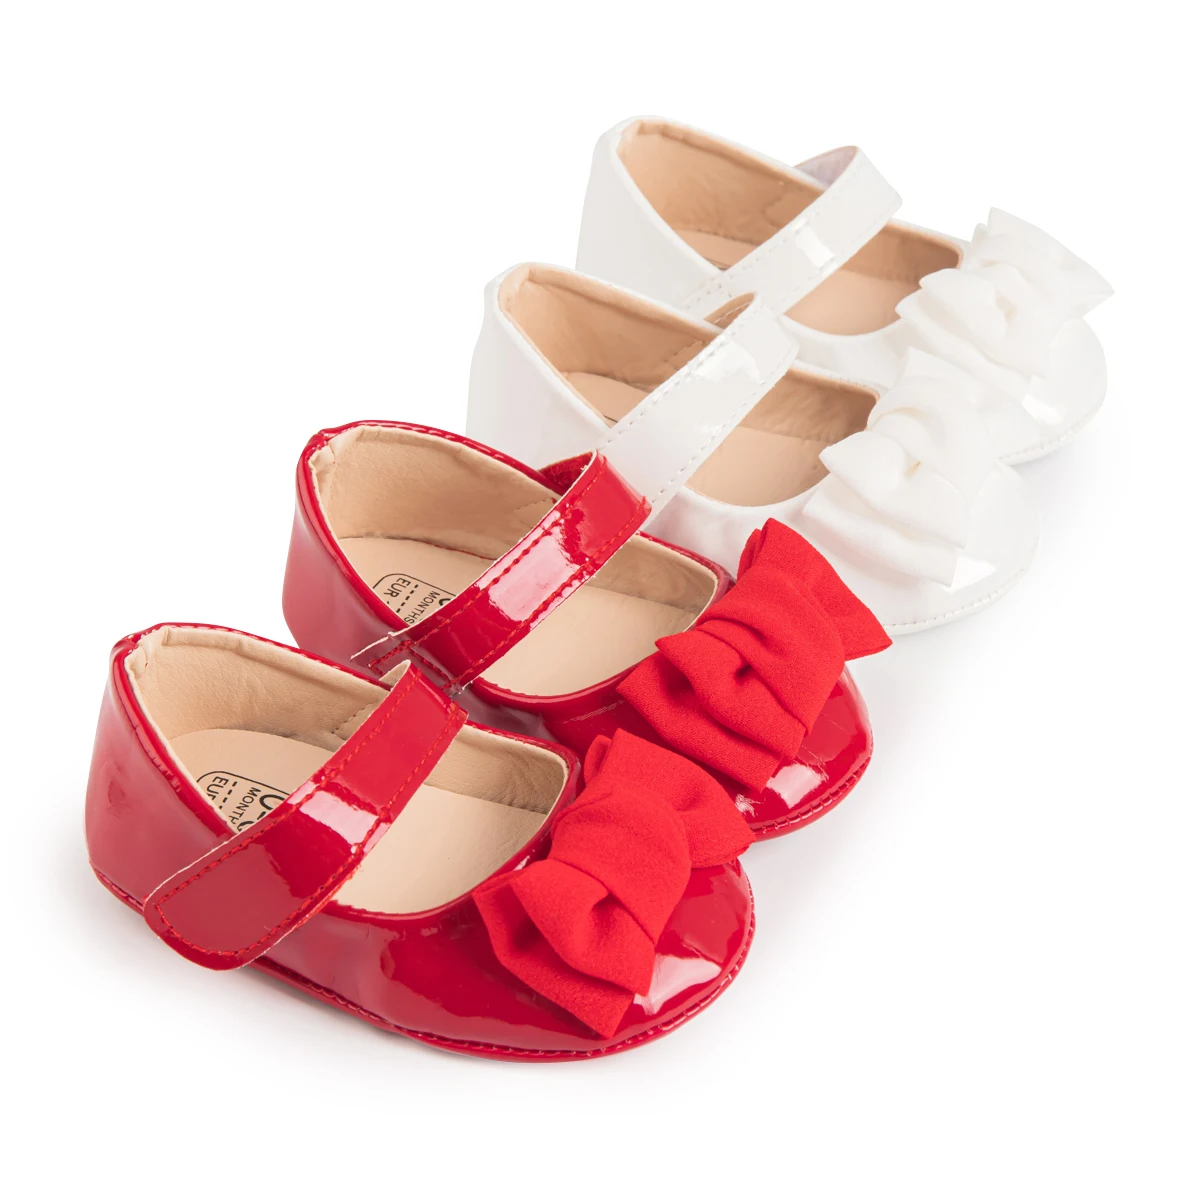 

New Design Infant Princess Party Fashion Wedding Rubber Soft Sole Mary Jane Flats Prewalker Baby Dress Shoes